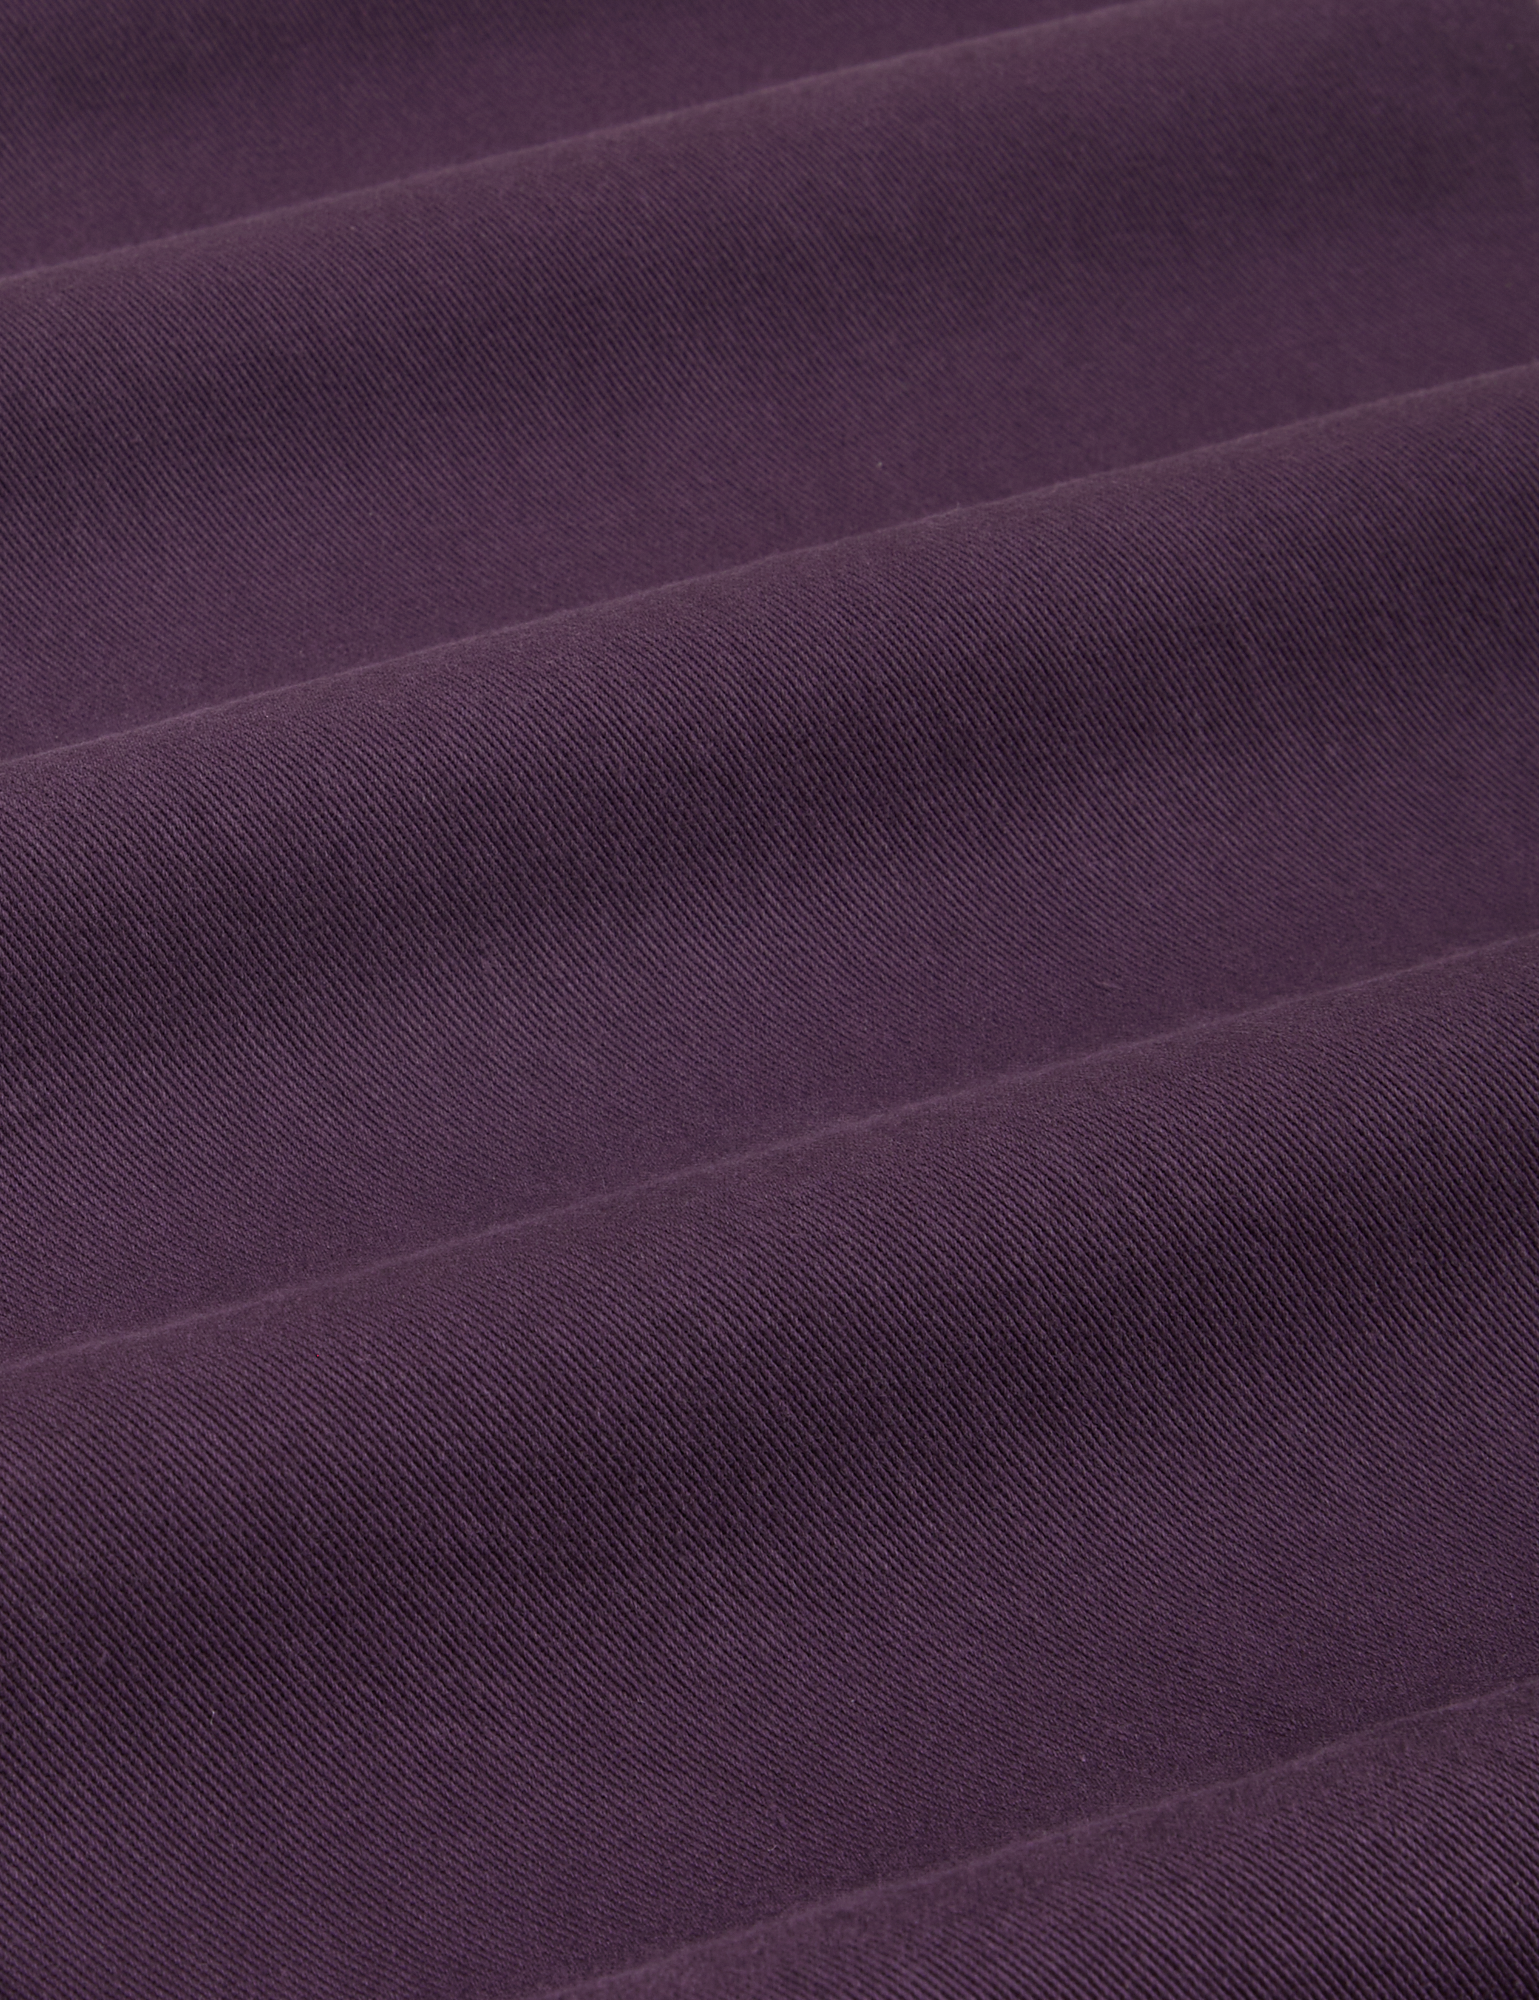 Work Pants in Nebula Purple fabric detail close up